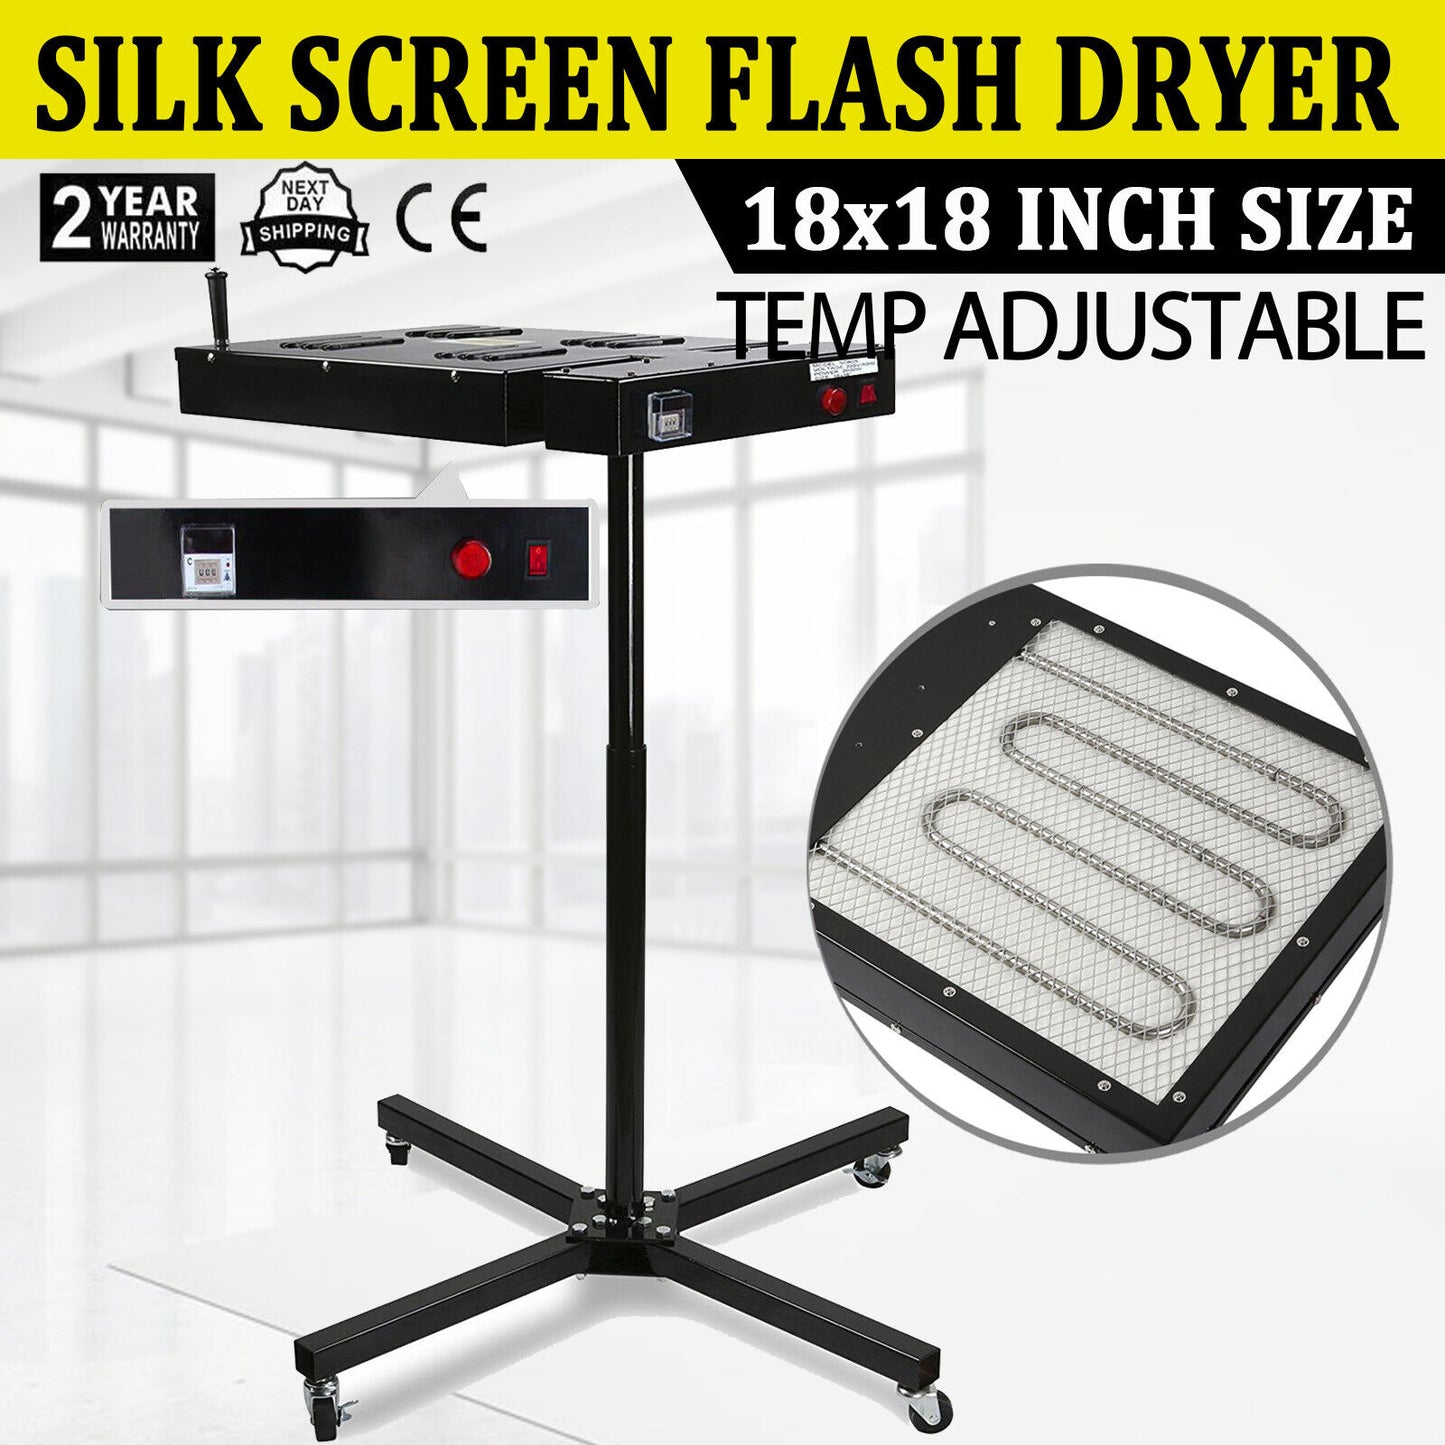 Adjustable 18" x 18" Flash Dryer Silkscreen T-shirt Printing Equipment Curing